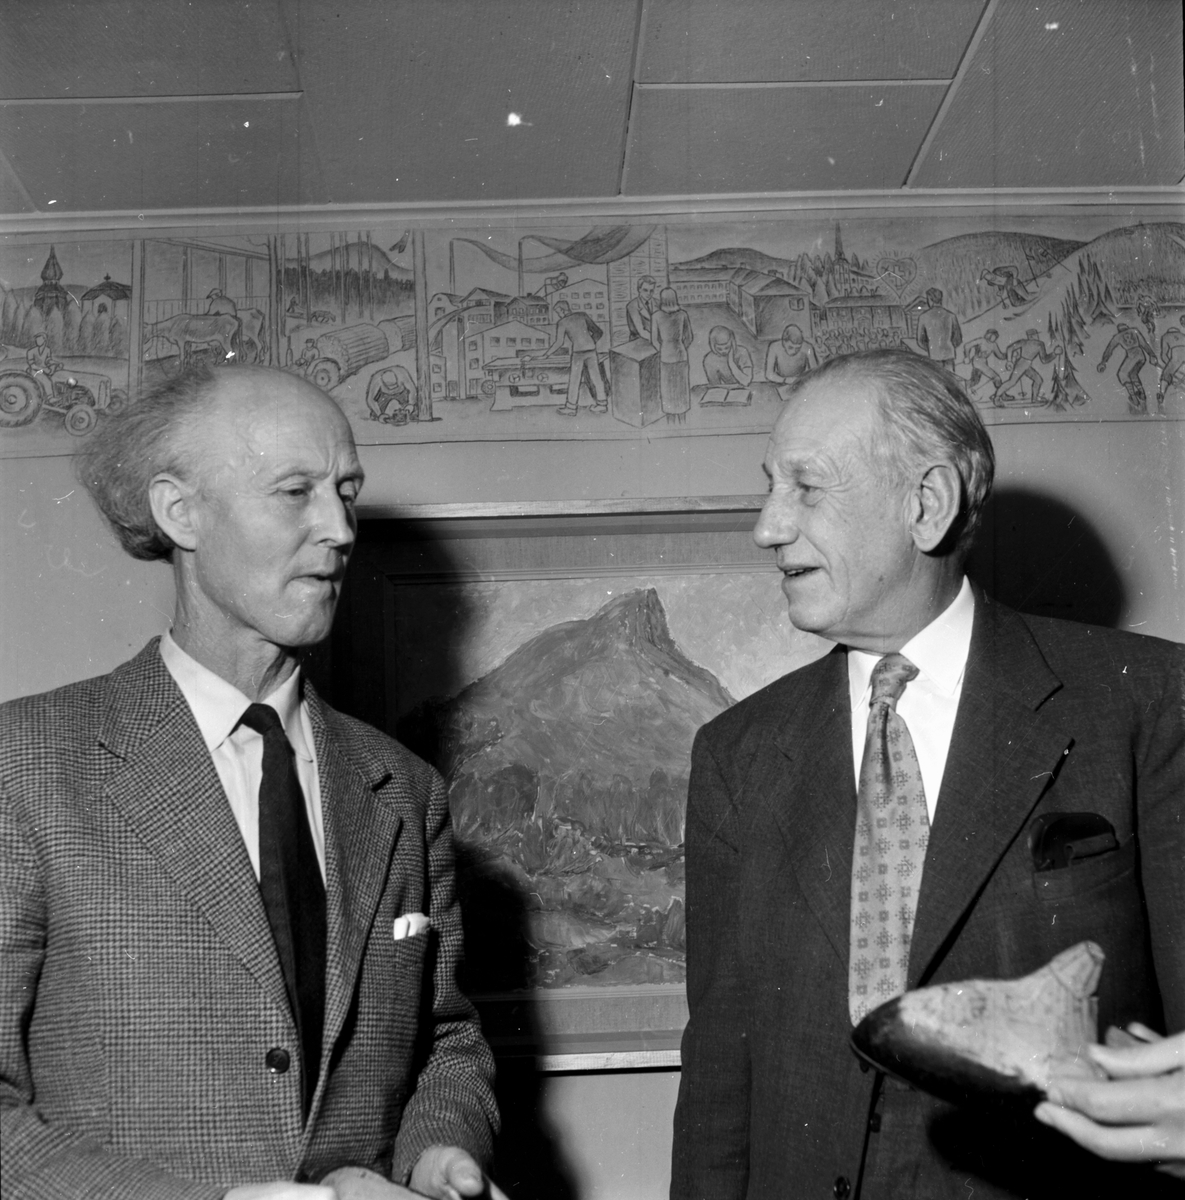 Clahr,Emil,Konstnär
Edsbyn 3 jan 1960